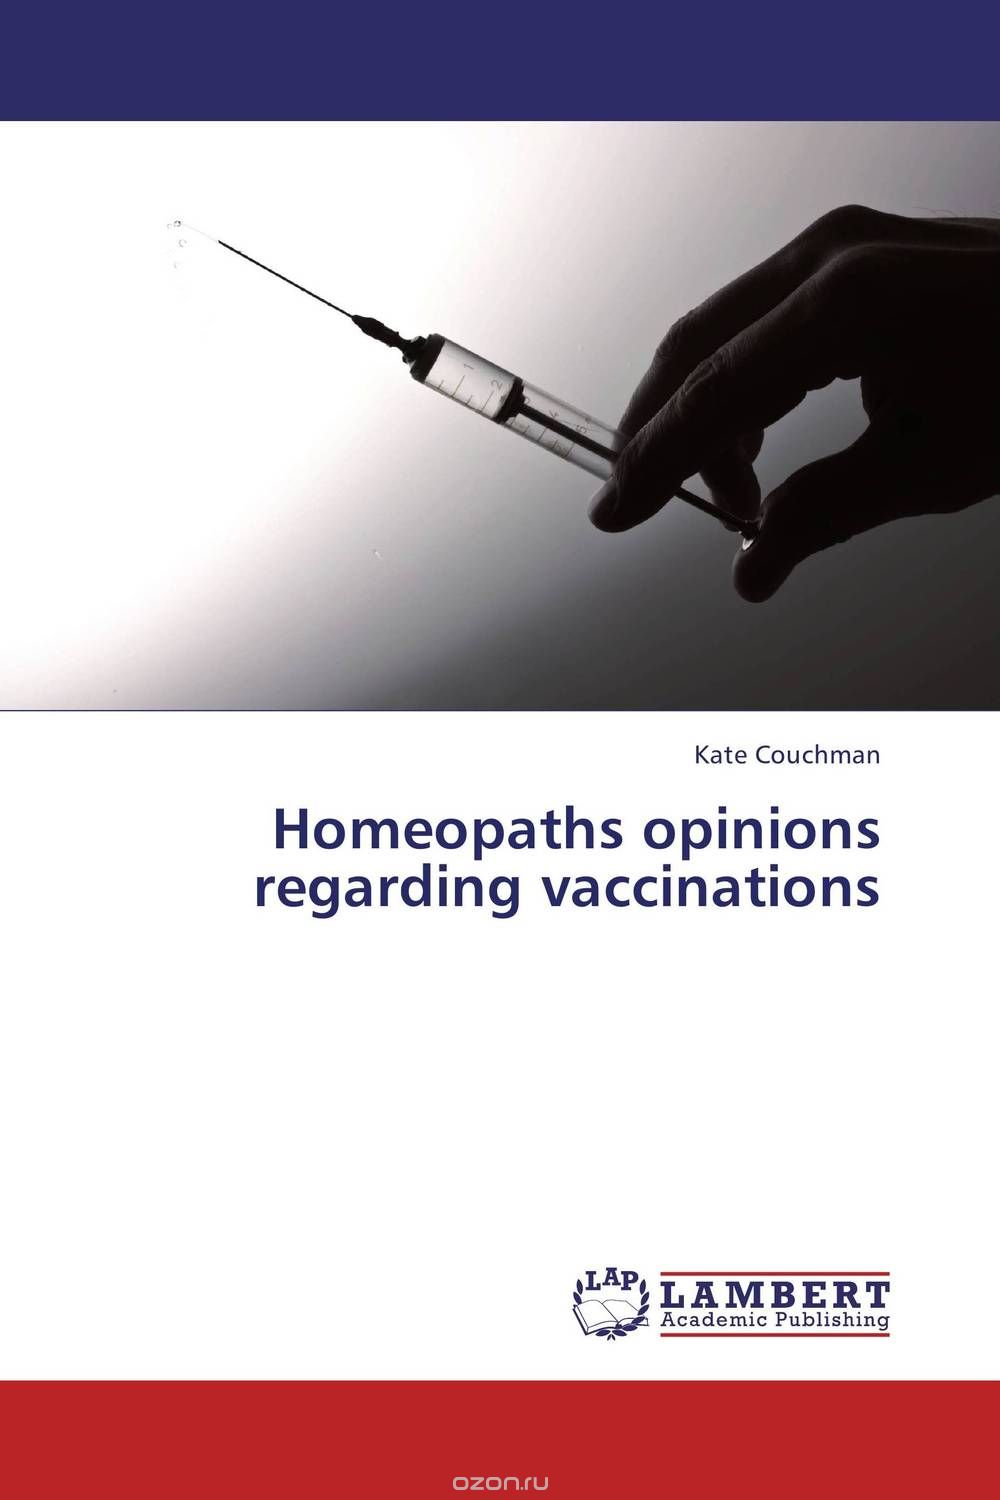 Скачать книгу "Homeopaths opinions regarding vaccinations"